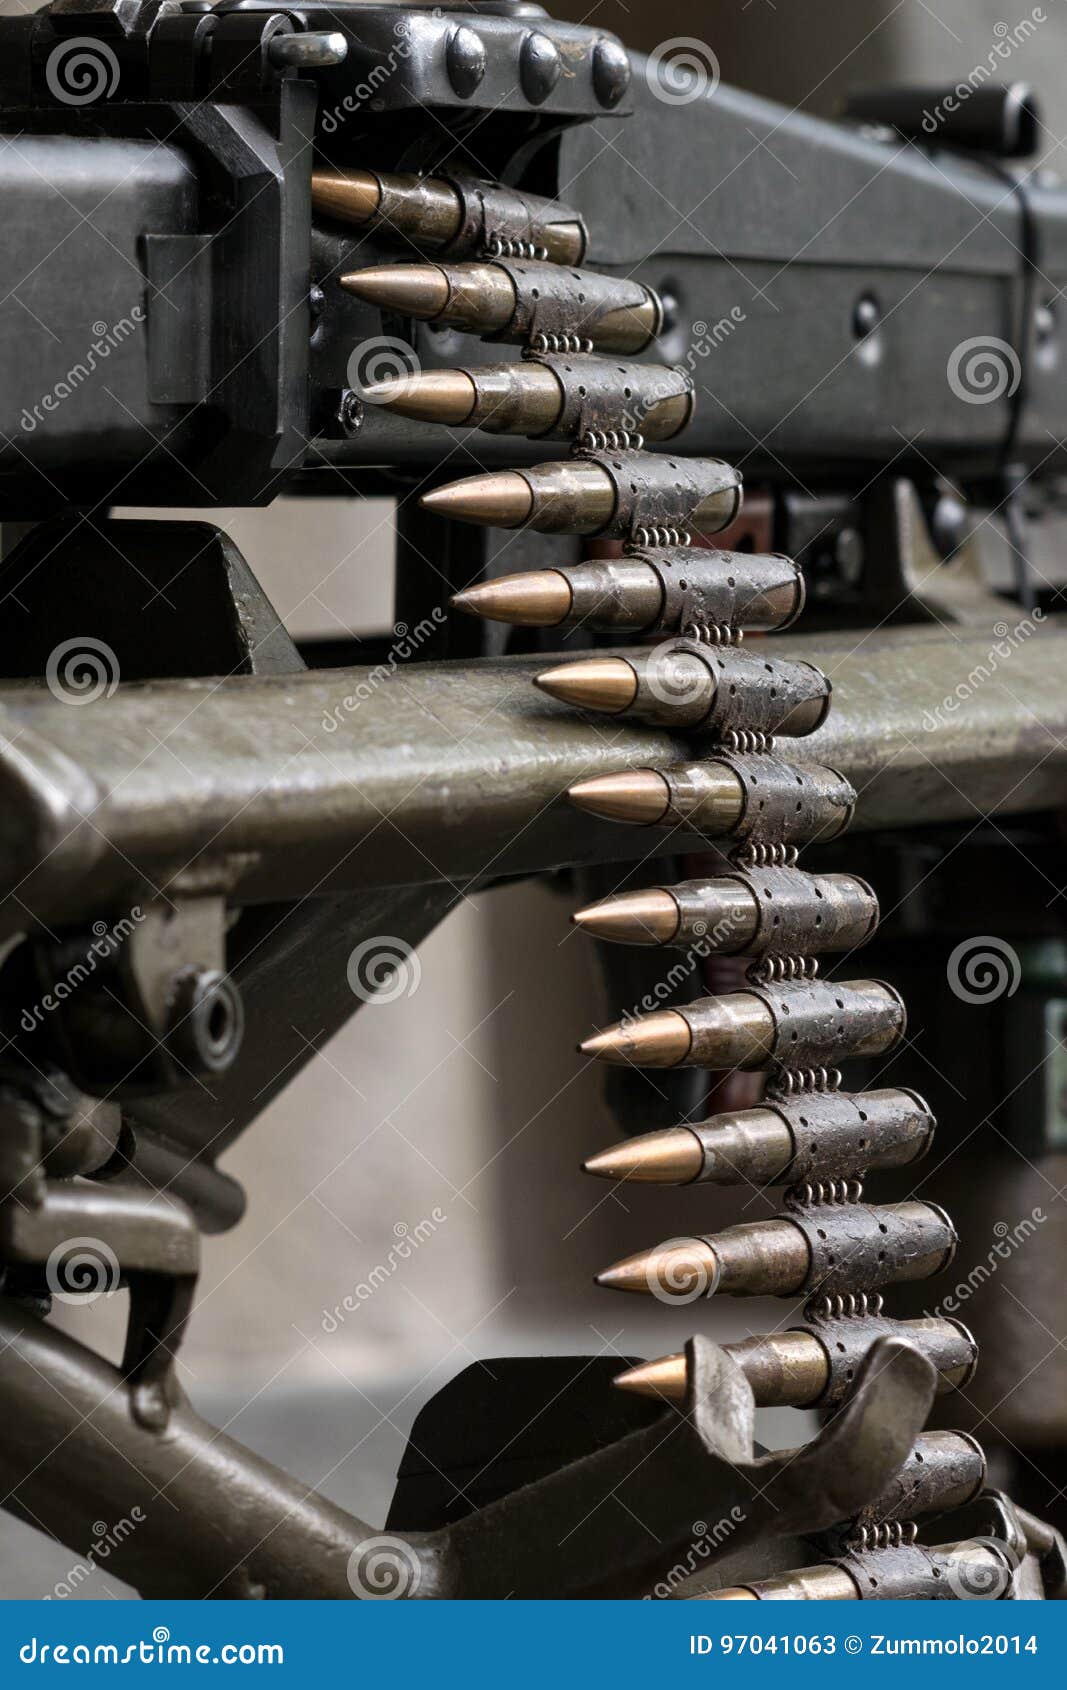 https://thumbs.dreamstime.com/z/german-machine-gun-mg-deadly-ammunition-caliber-known-as-hitler-s-buzz-saw-97041063.jpg